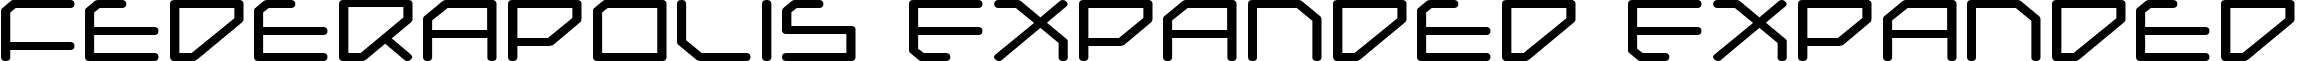 Federapolis Expanded Expanded font - federapolise.ttf